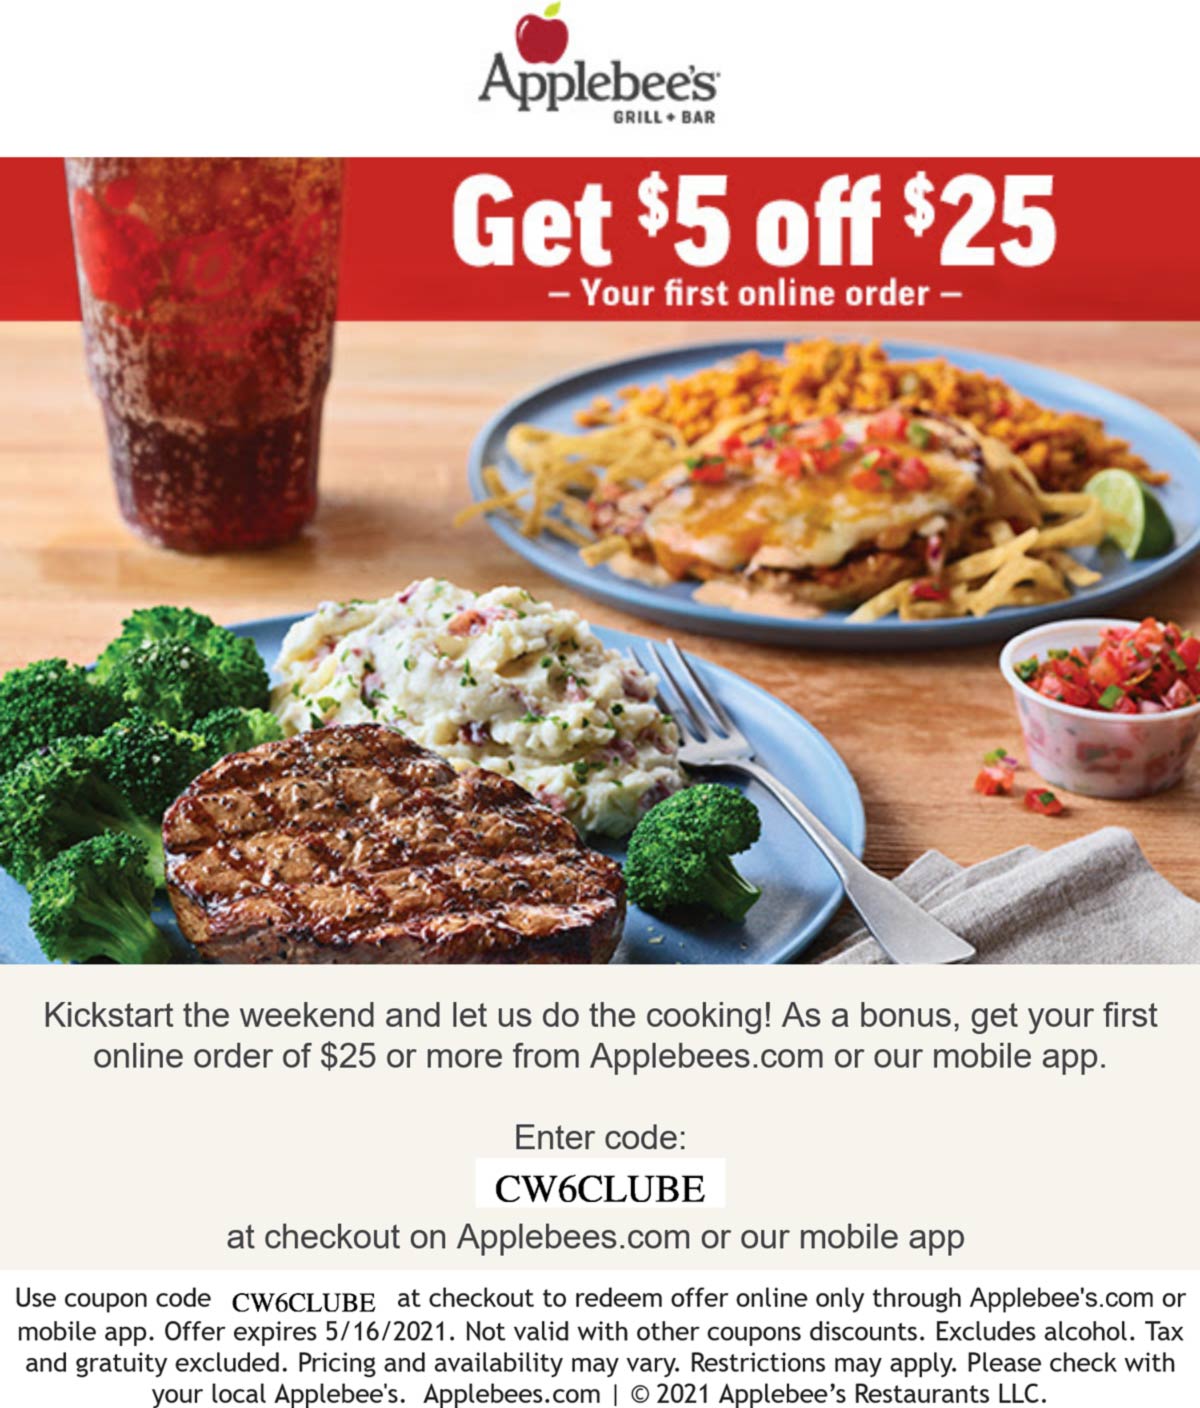 Applebees restaurants Coupon  $5 off $25 first online order at Applebees via promo code CW6CLUBE #applebees 